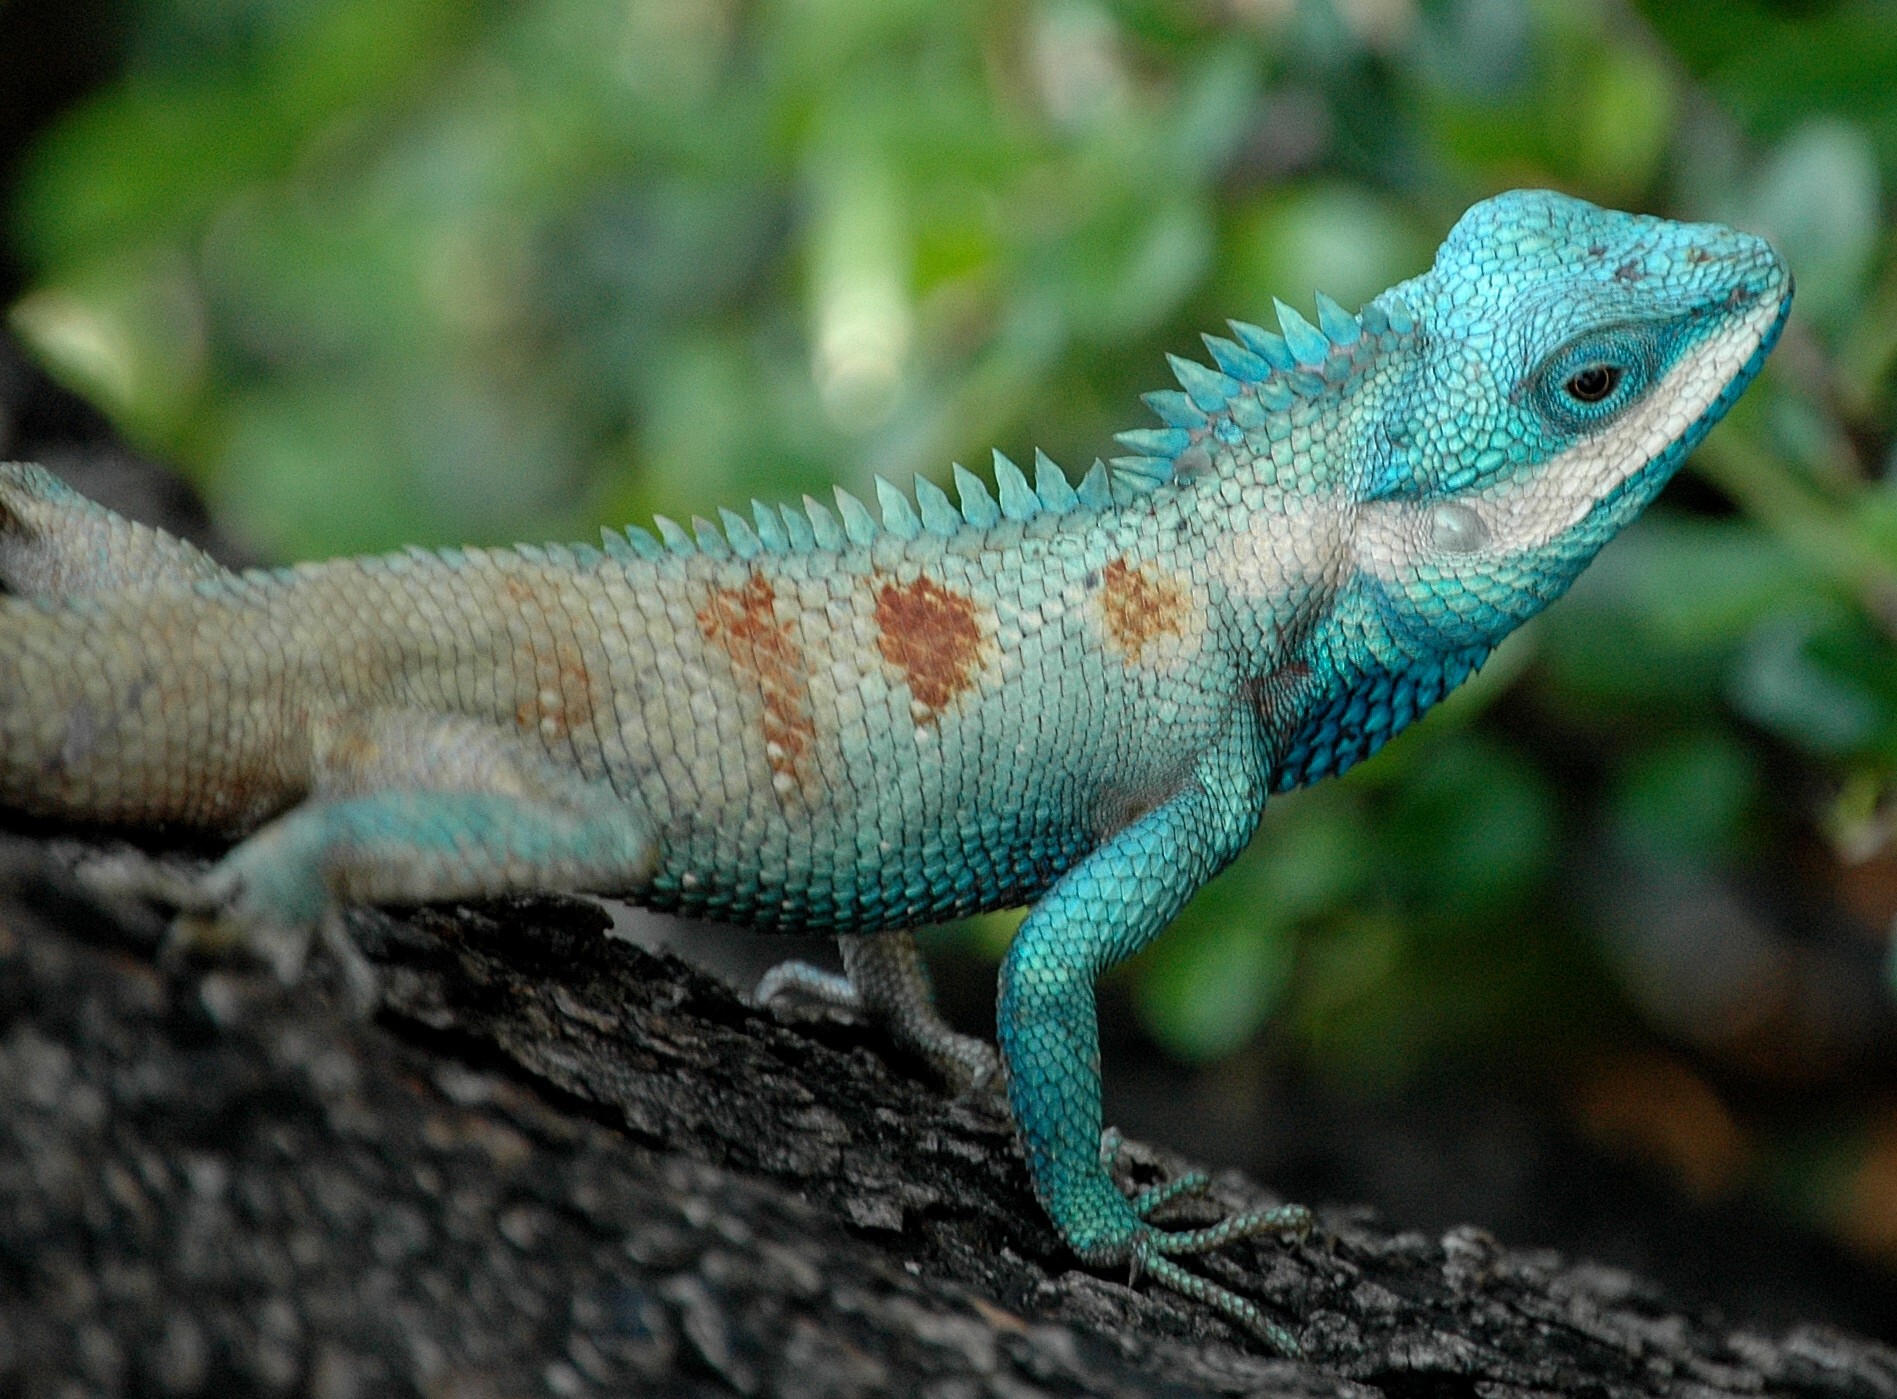 File:Bangkok Reptiles Blue crested Lizard.jpg - Wikimedia Commons